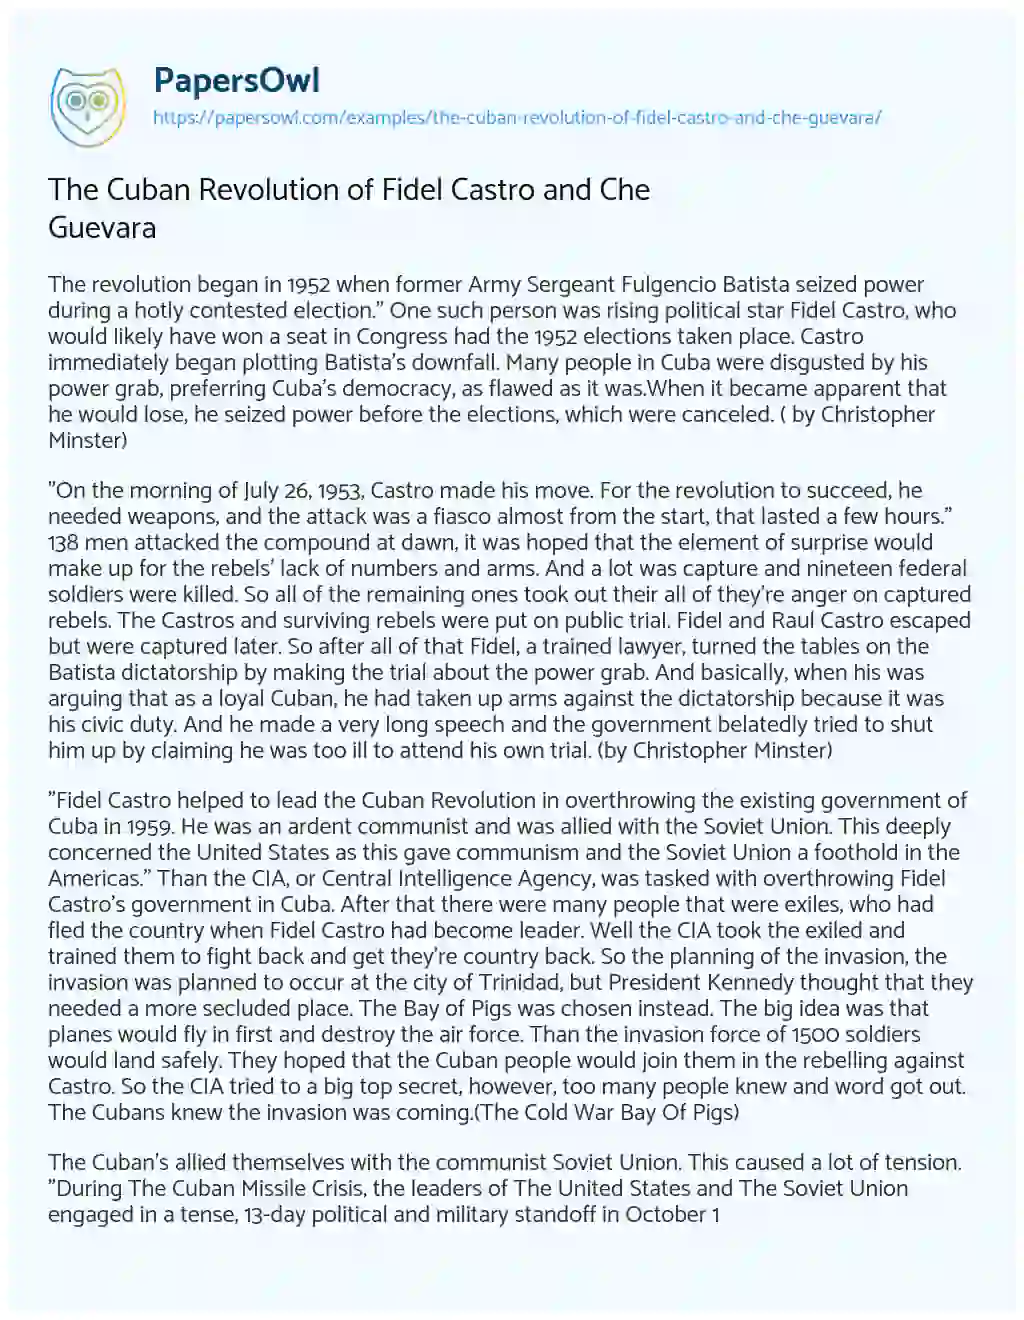 Essay on The Cuban Revolution of Fidel Castro and Che Guevara